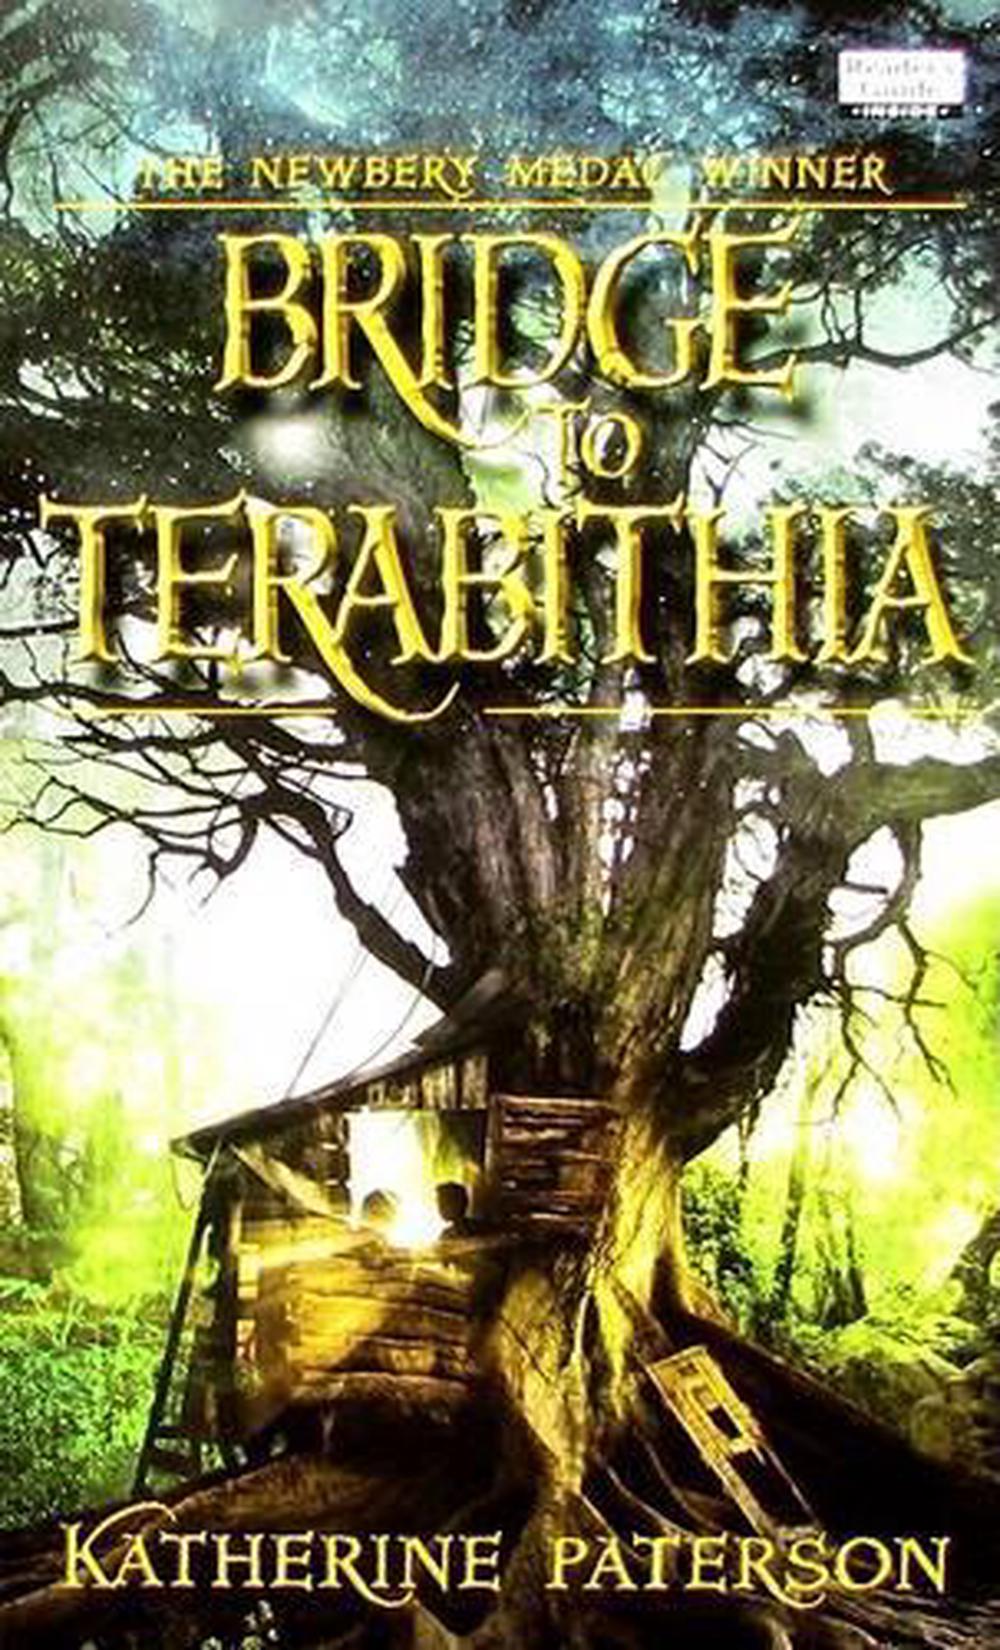 bridge to terabithia book cover